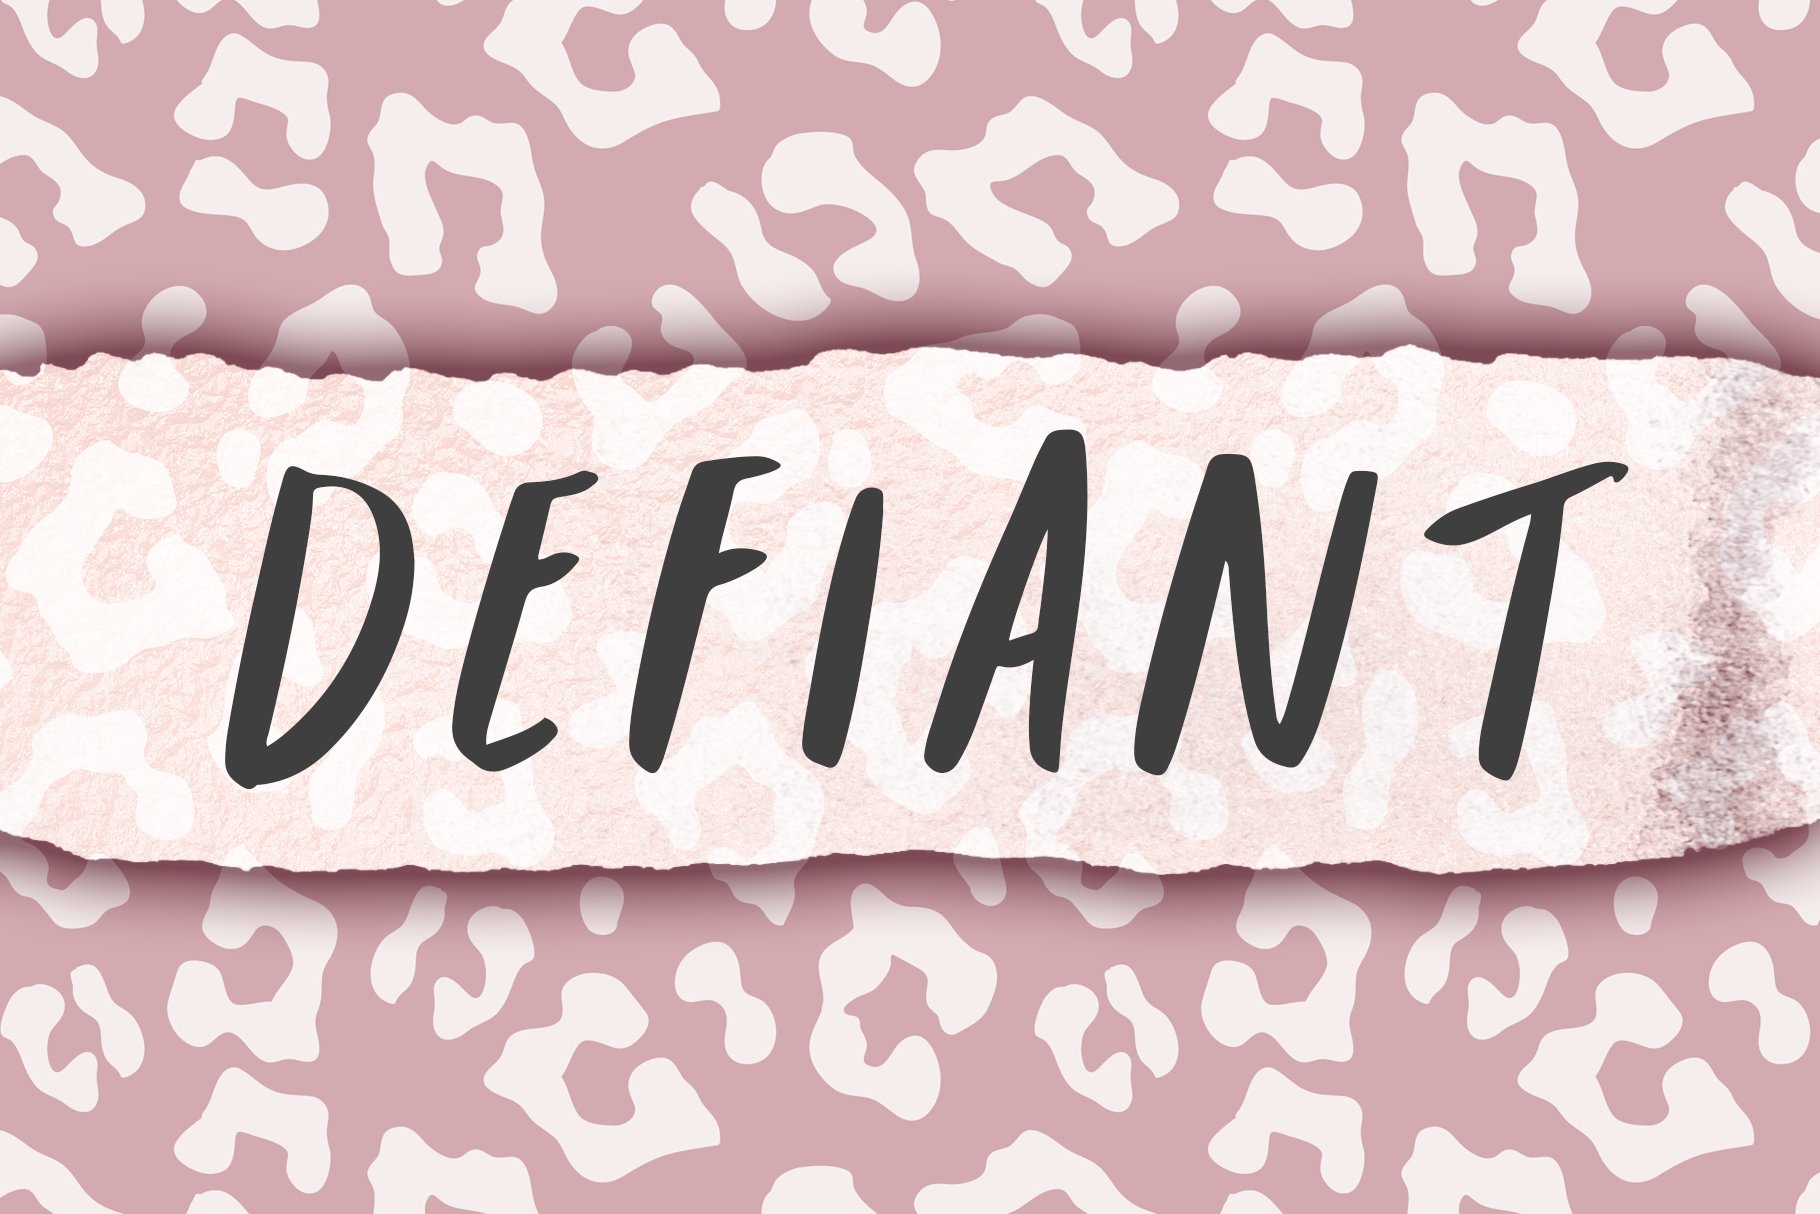 Defiant - a Rebellious Font cover image.